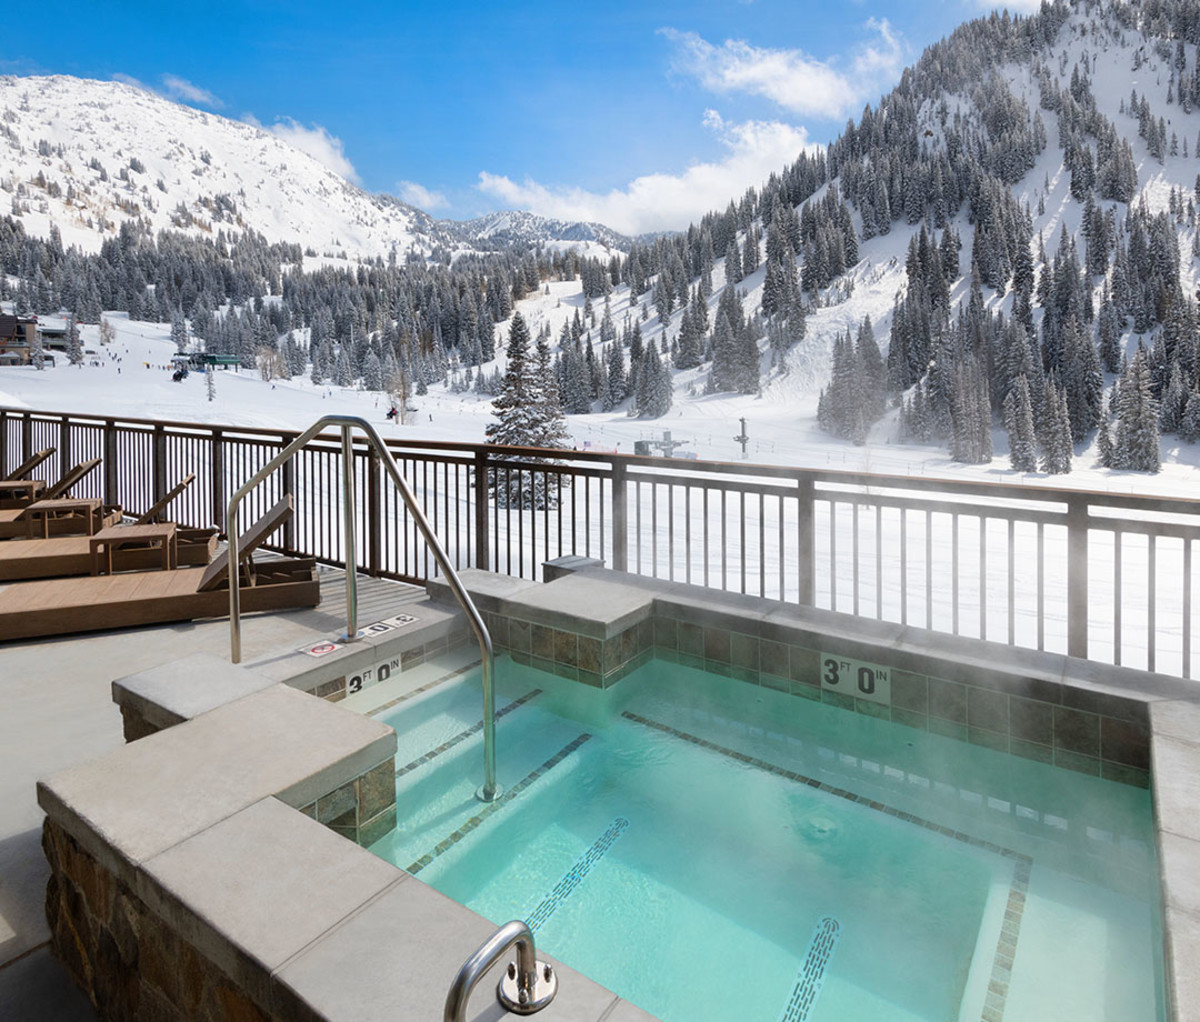 The Snowpine Lodge's hot tub